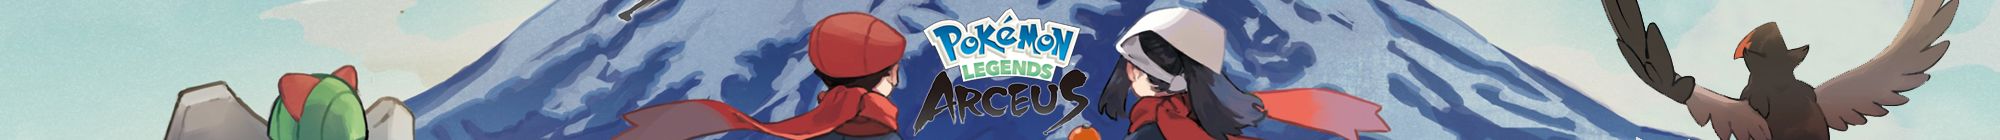 pokemon-legends-arceus-complete-guide-banner